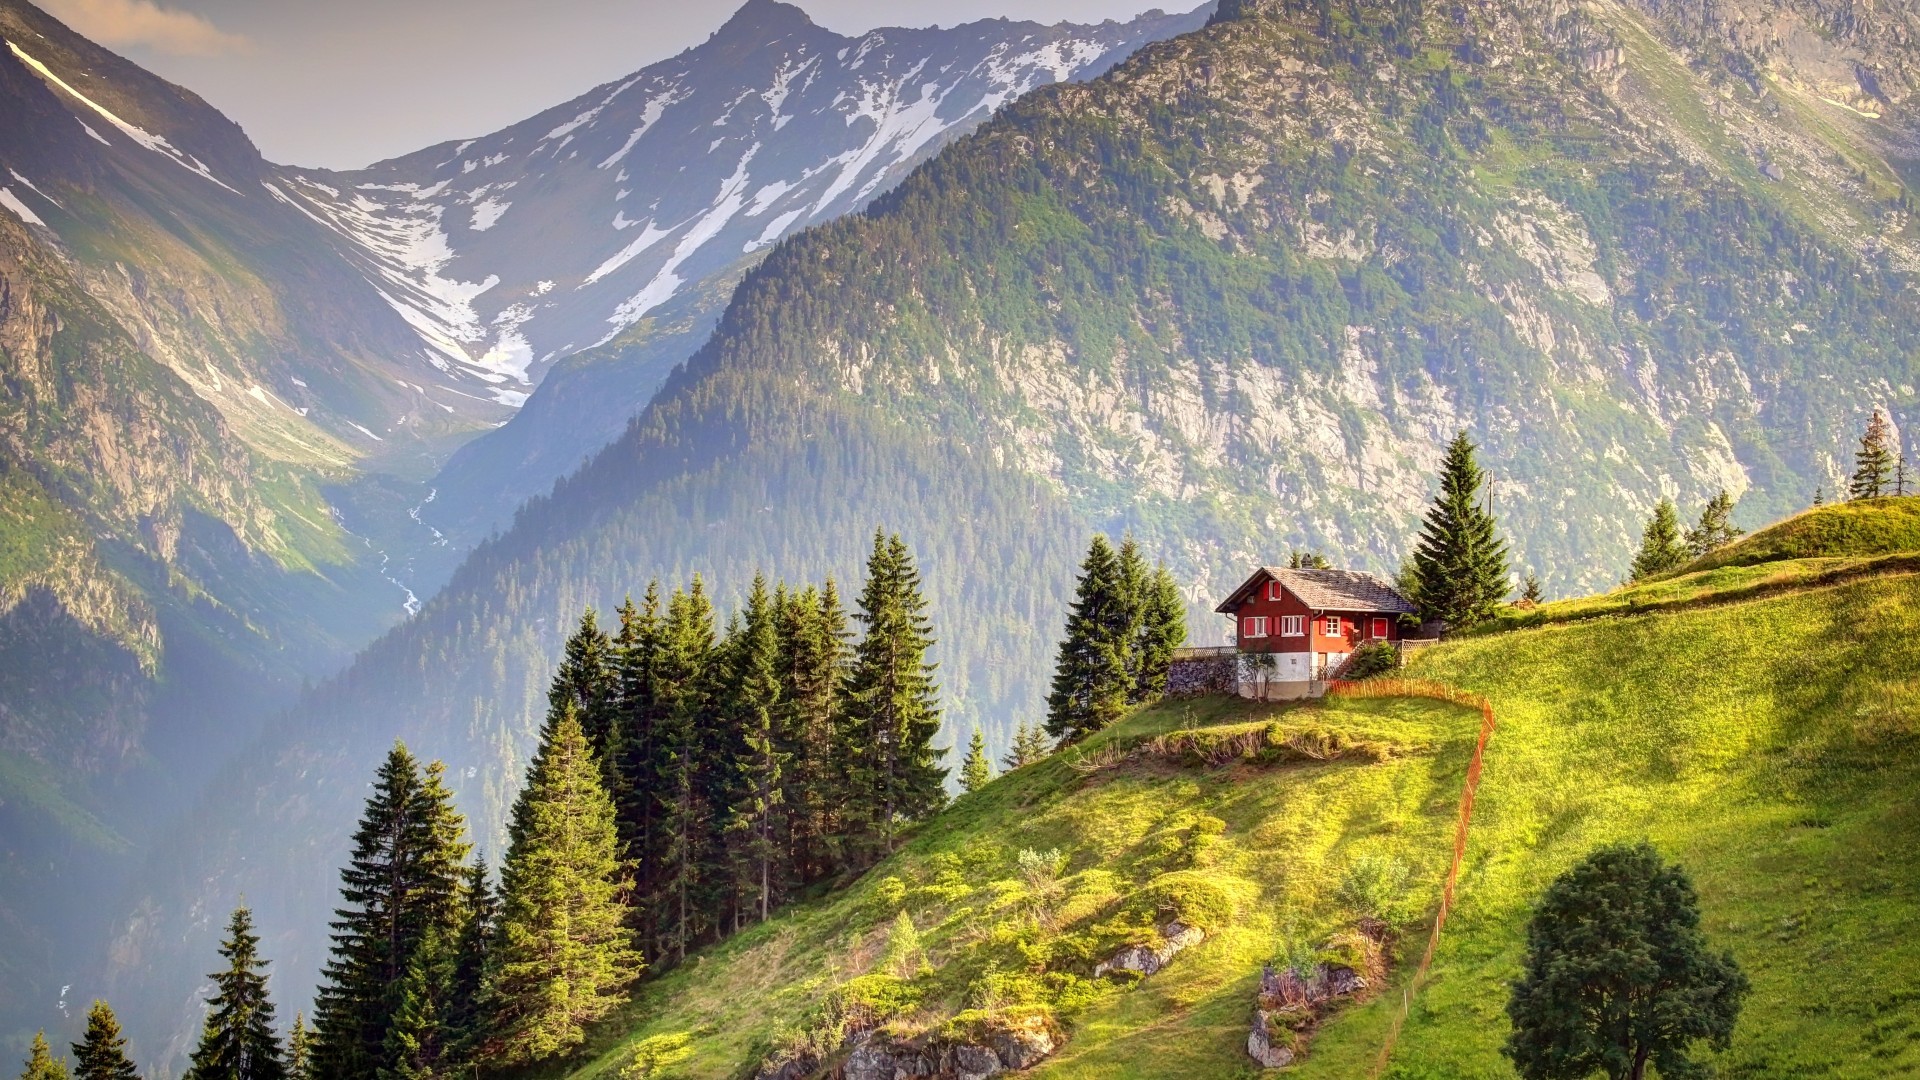 General 1920x1080 landscape mountains cottage Swiss Alps pine trees idyllic nature